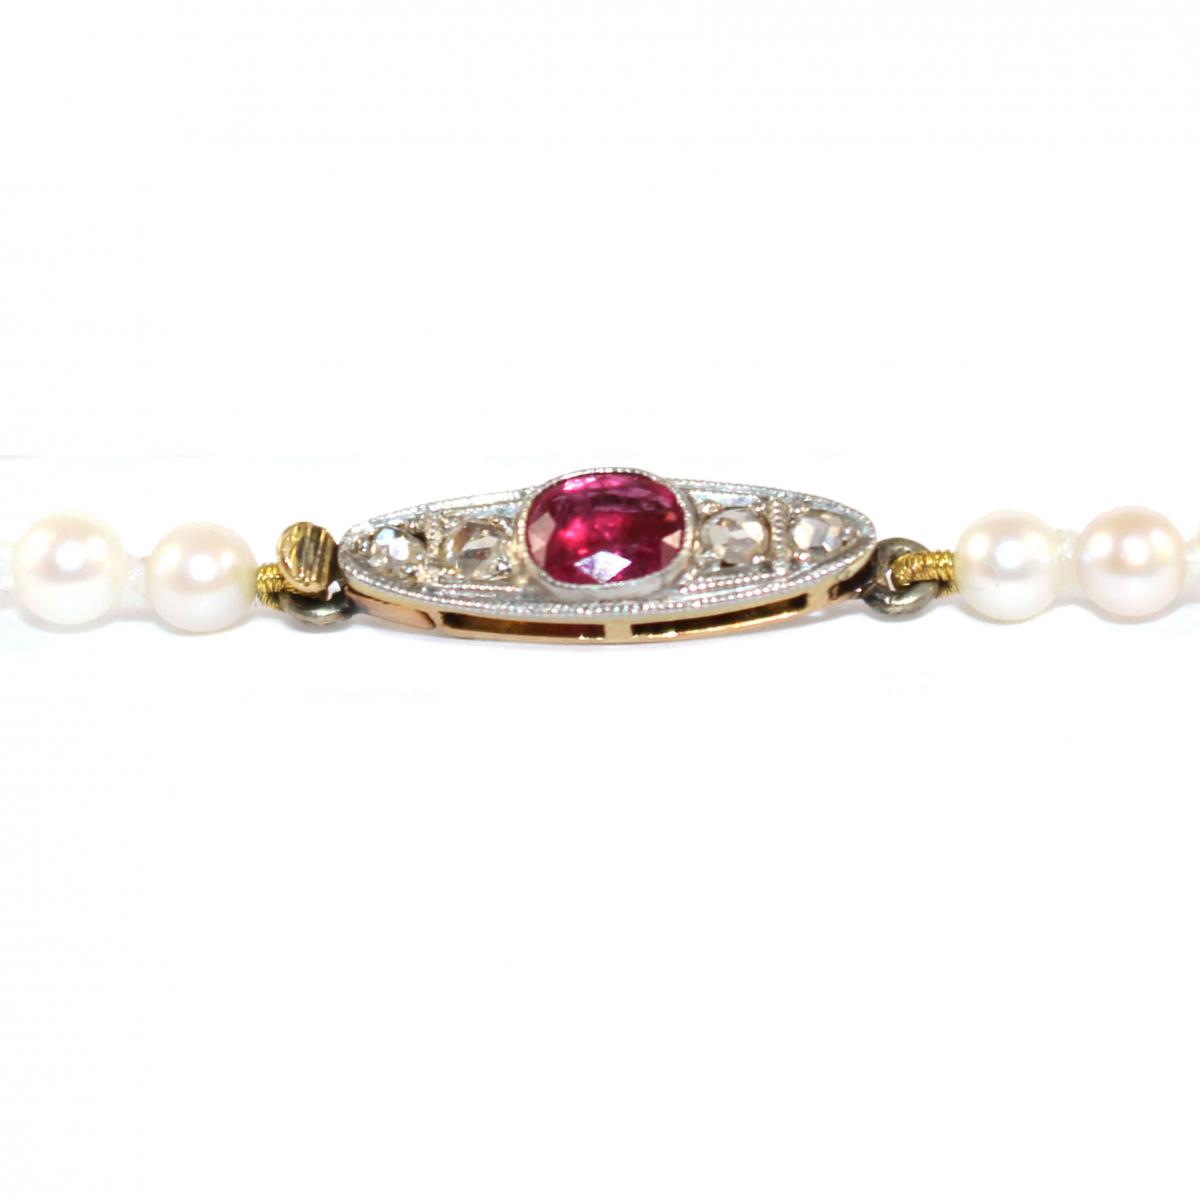 Edwardian Graduated Pearl Necklace, Ruby & Diamond clasp c.1920